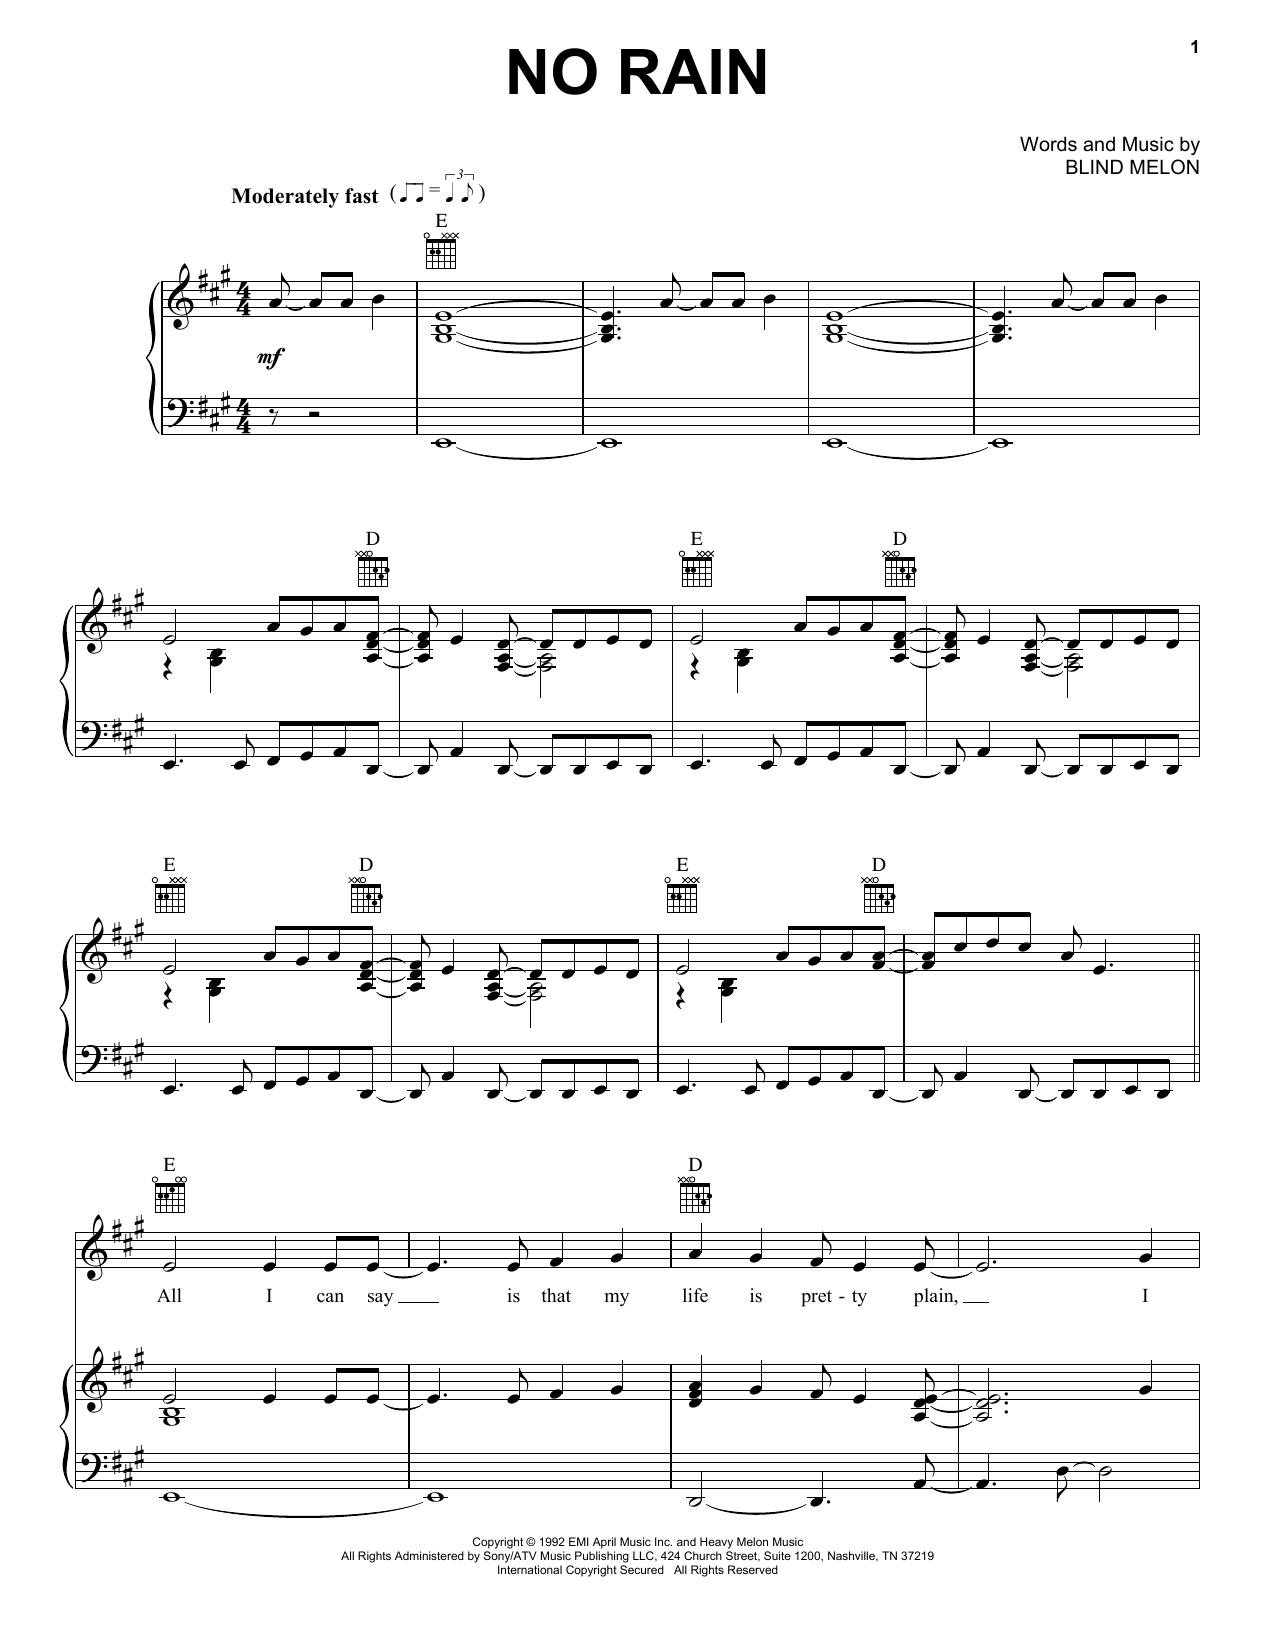 Blind Melon No Rain Sheet Music Notes & Chords for Guitar Tab Play-Along - Download or Print PDF